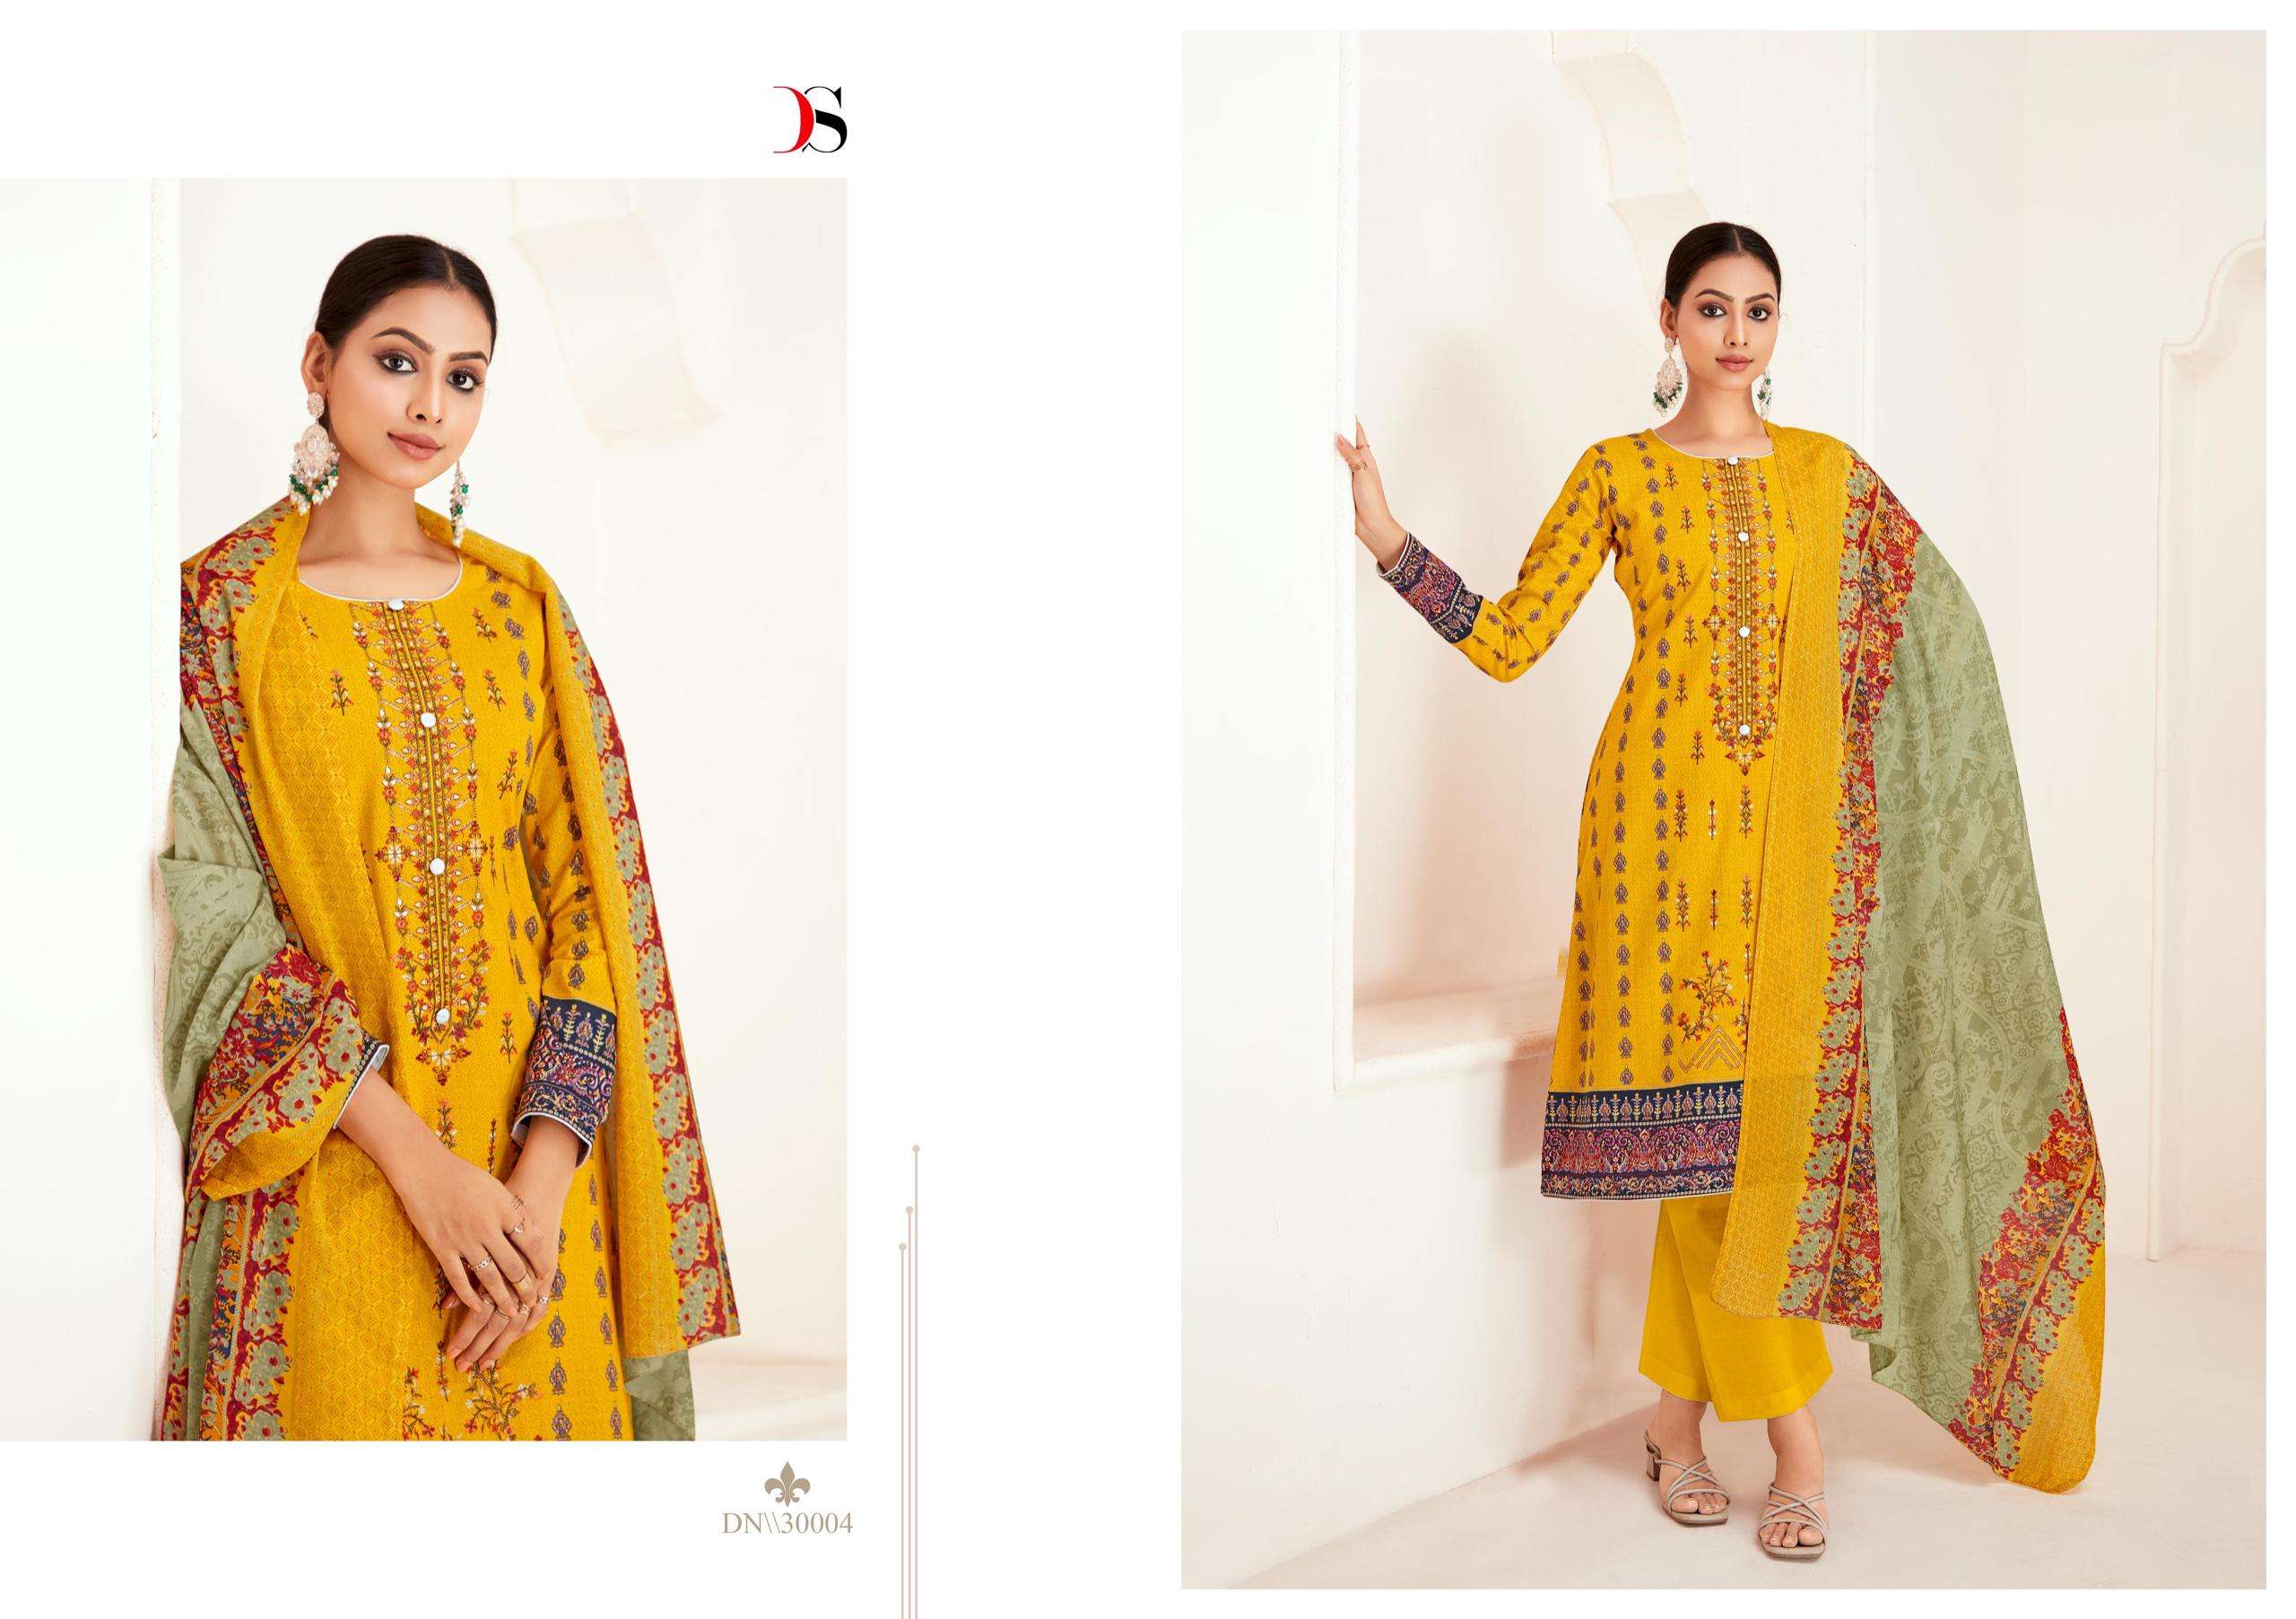 Deepsy Sazhar 3 Cotton Dupatta Embroidery Salwar Kameez Wholesale catalog